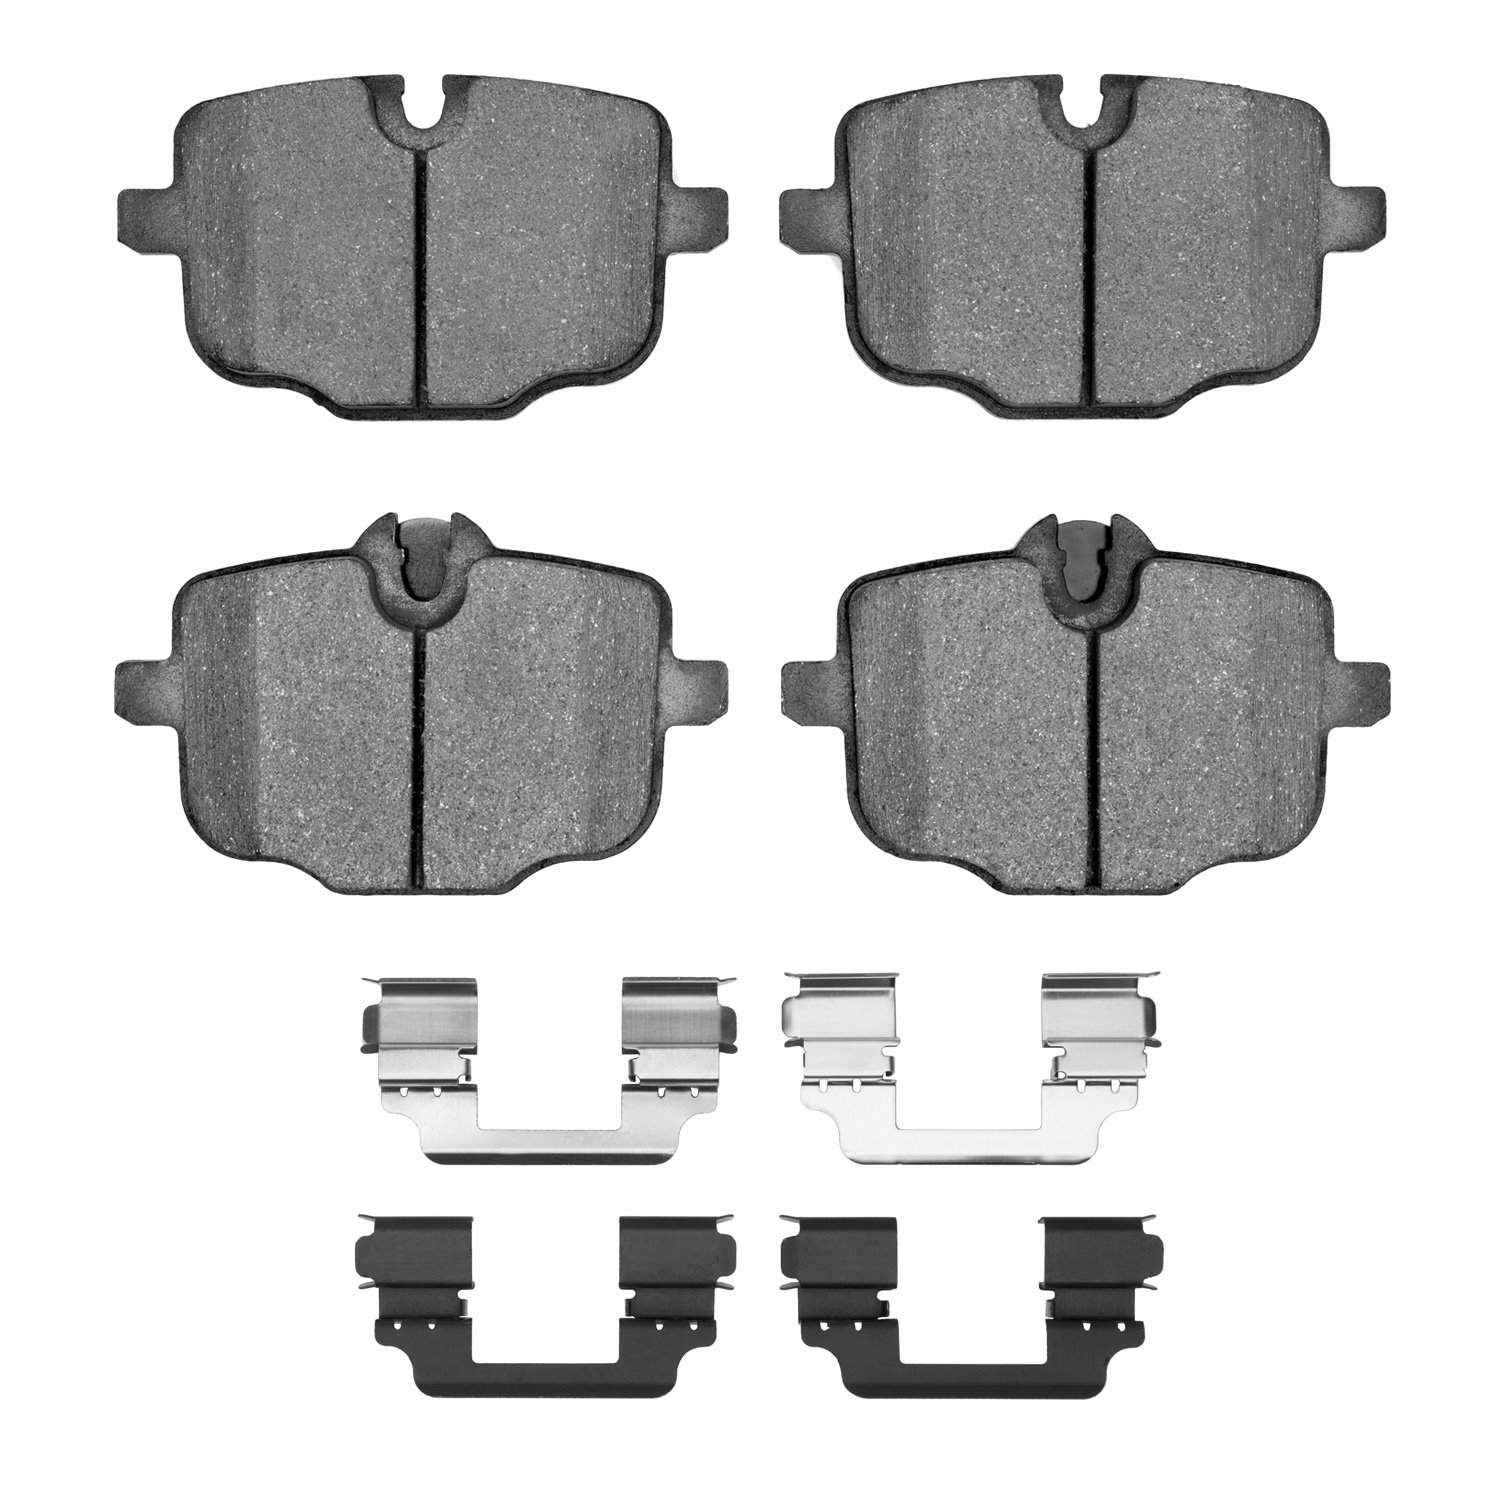 1310-1850-01 3000-Series Ceramic Brake Pads & Hardware Kit, Fits Select BMW, Position: Rear